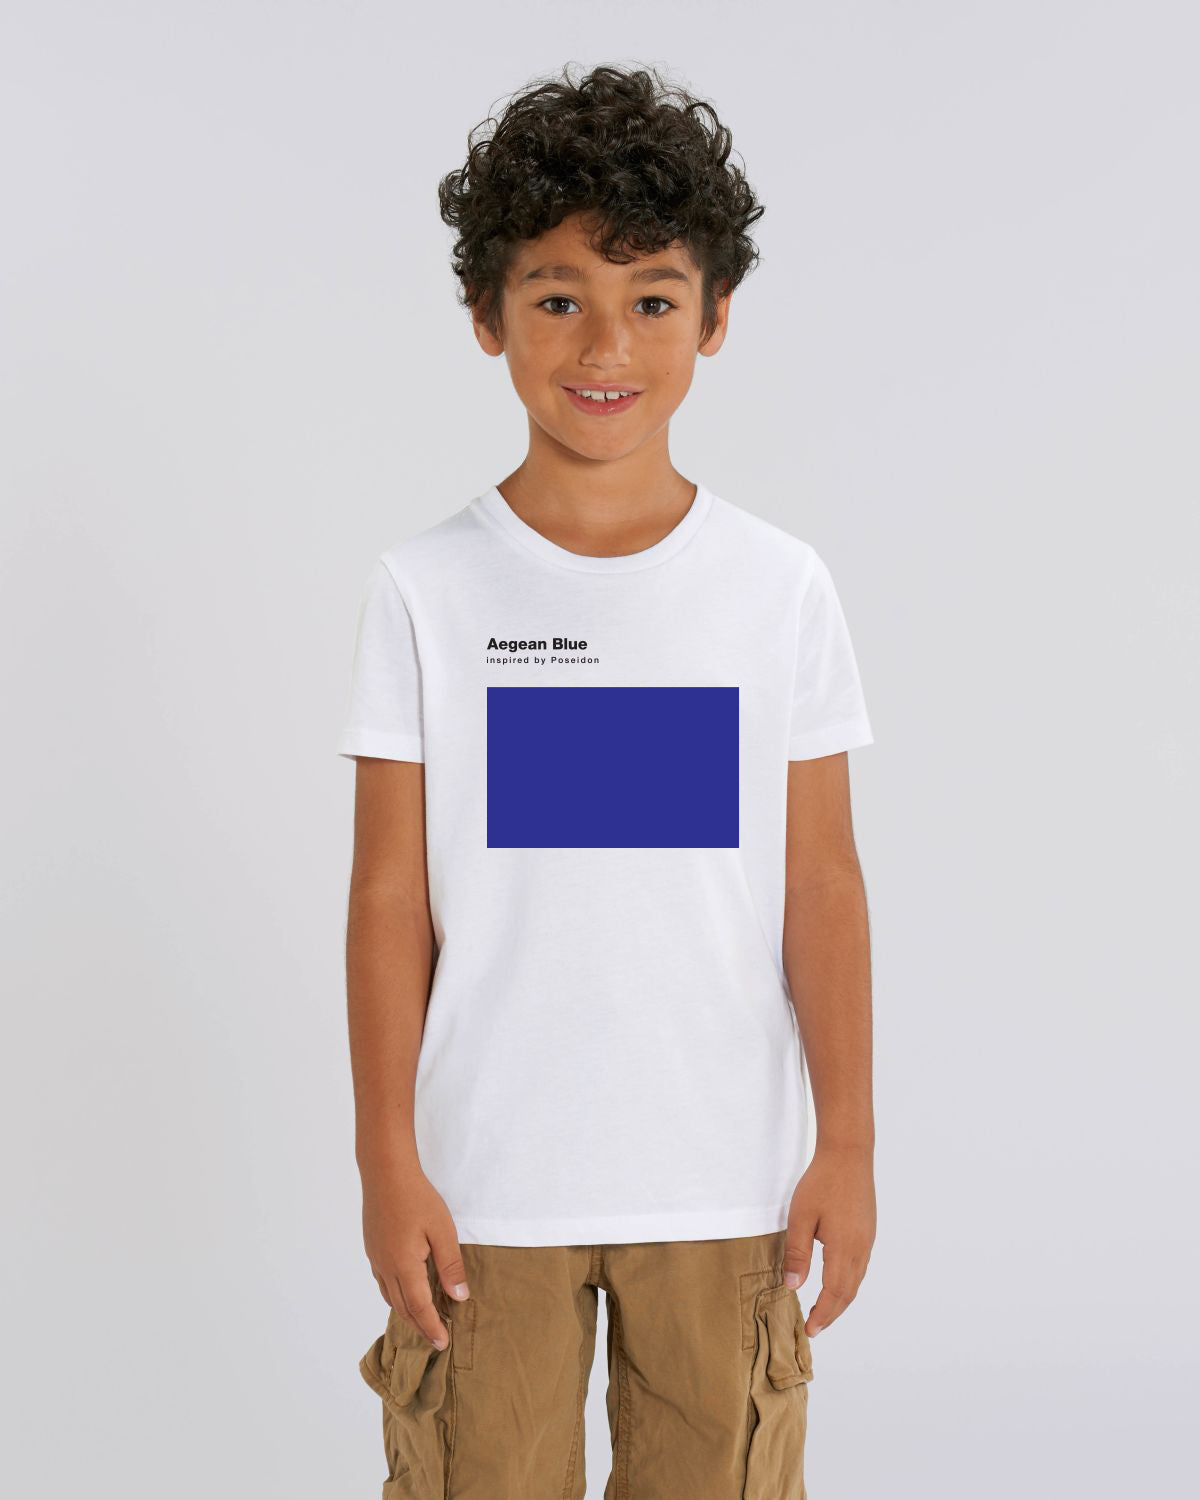 Aegean Blue kids t shirt